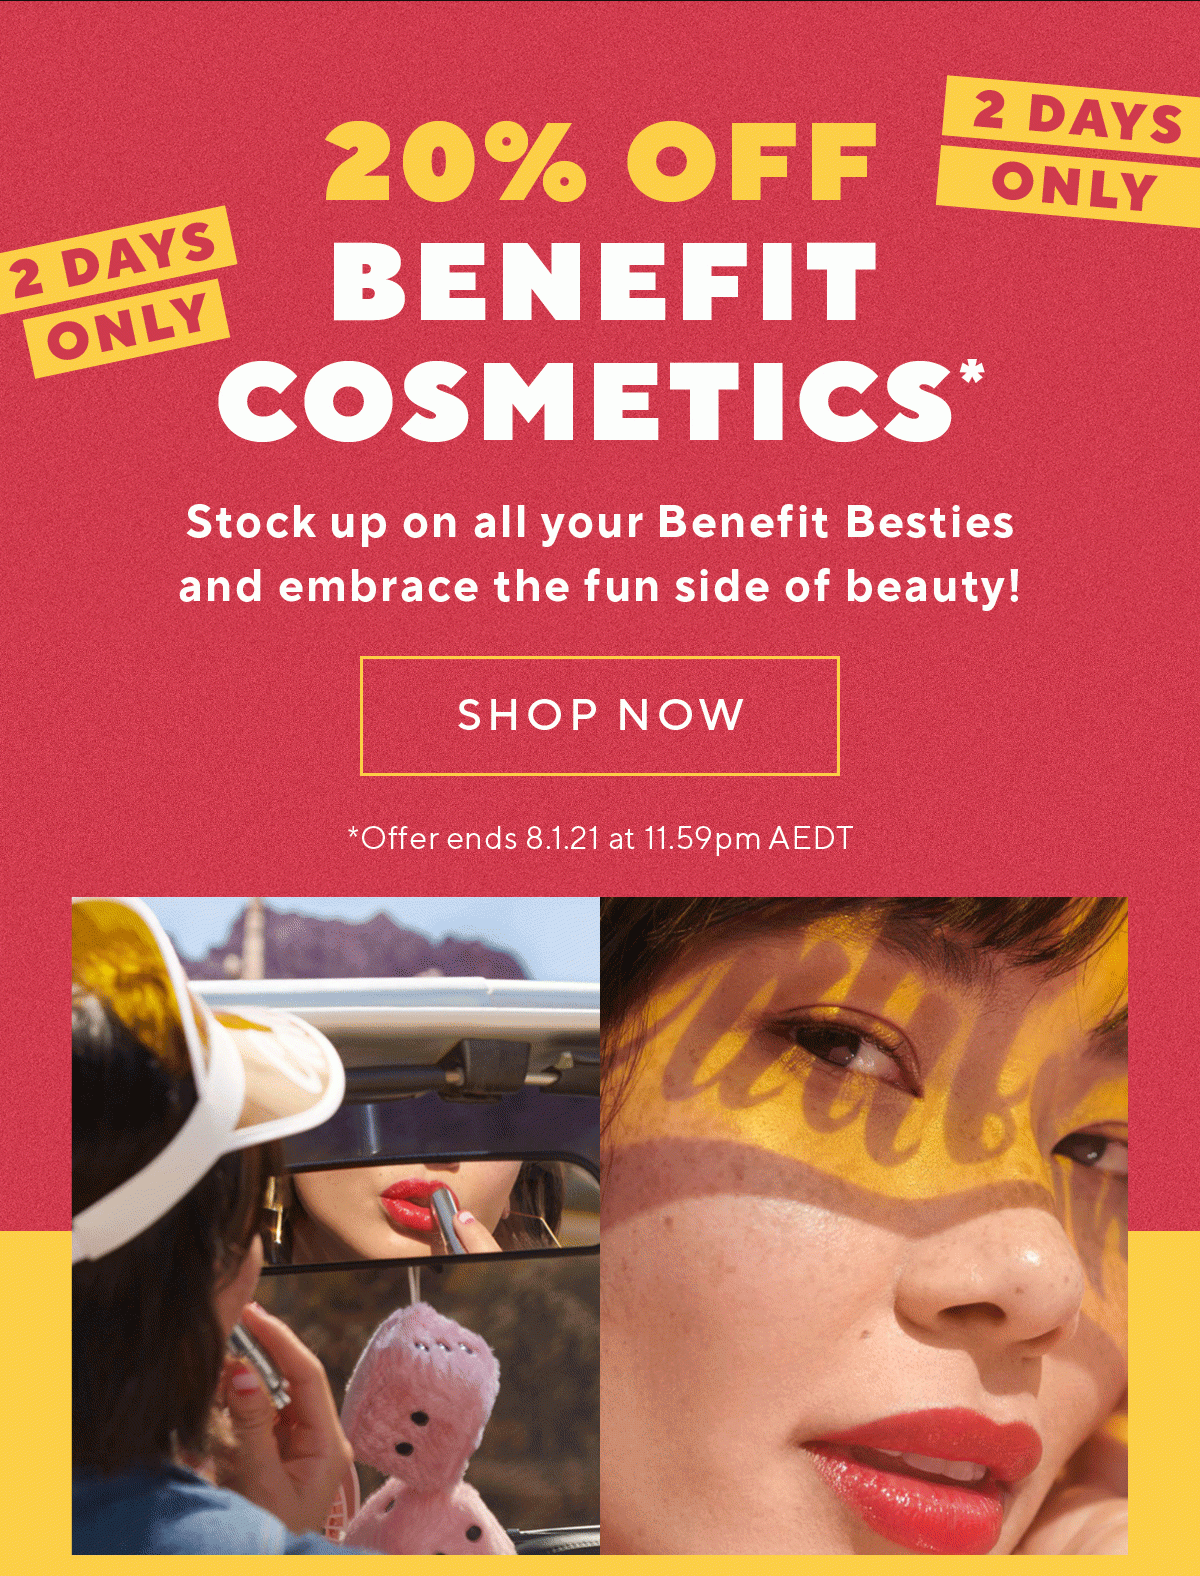 20% off Benefit Cosmetics*